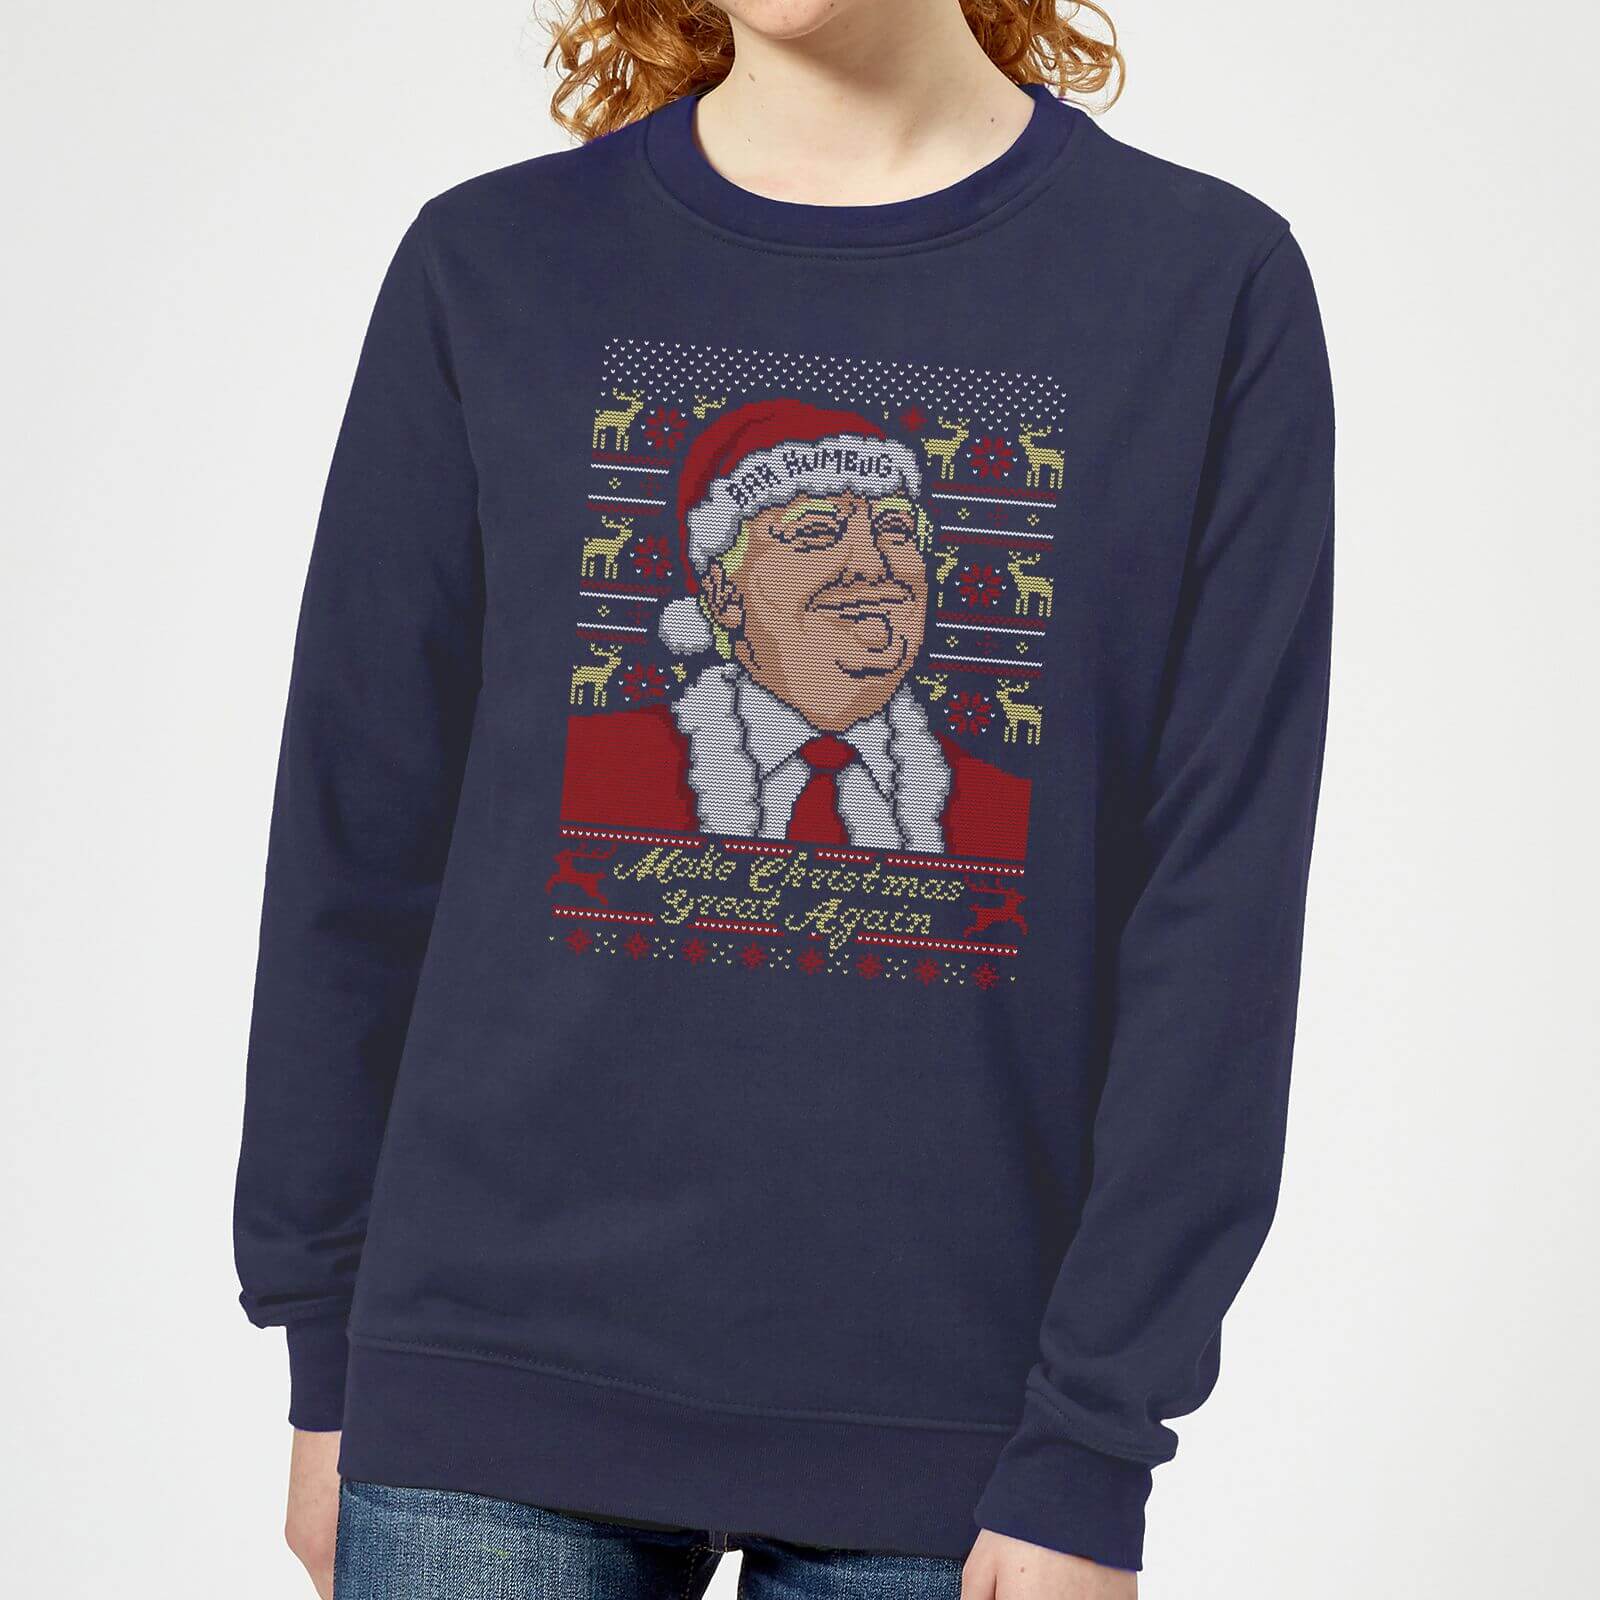 Make Christmas Great Again Women's Christmas Sweatshirt - Navy - XS